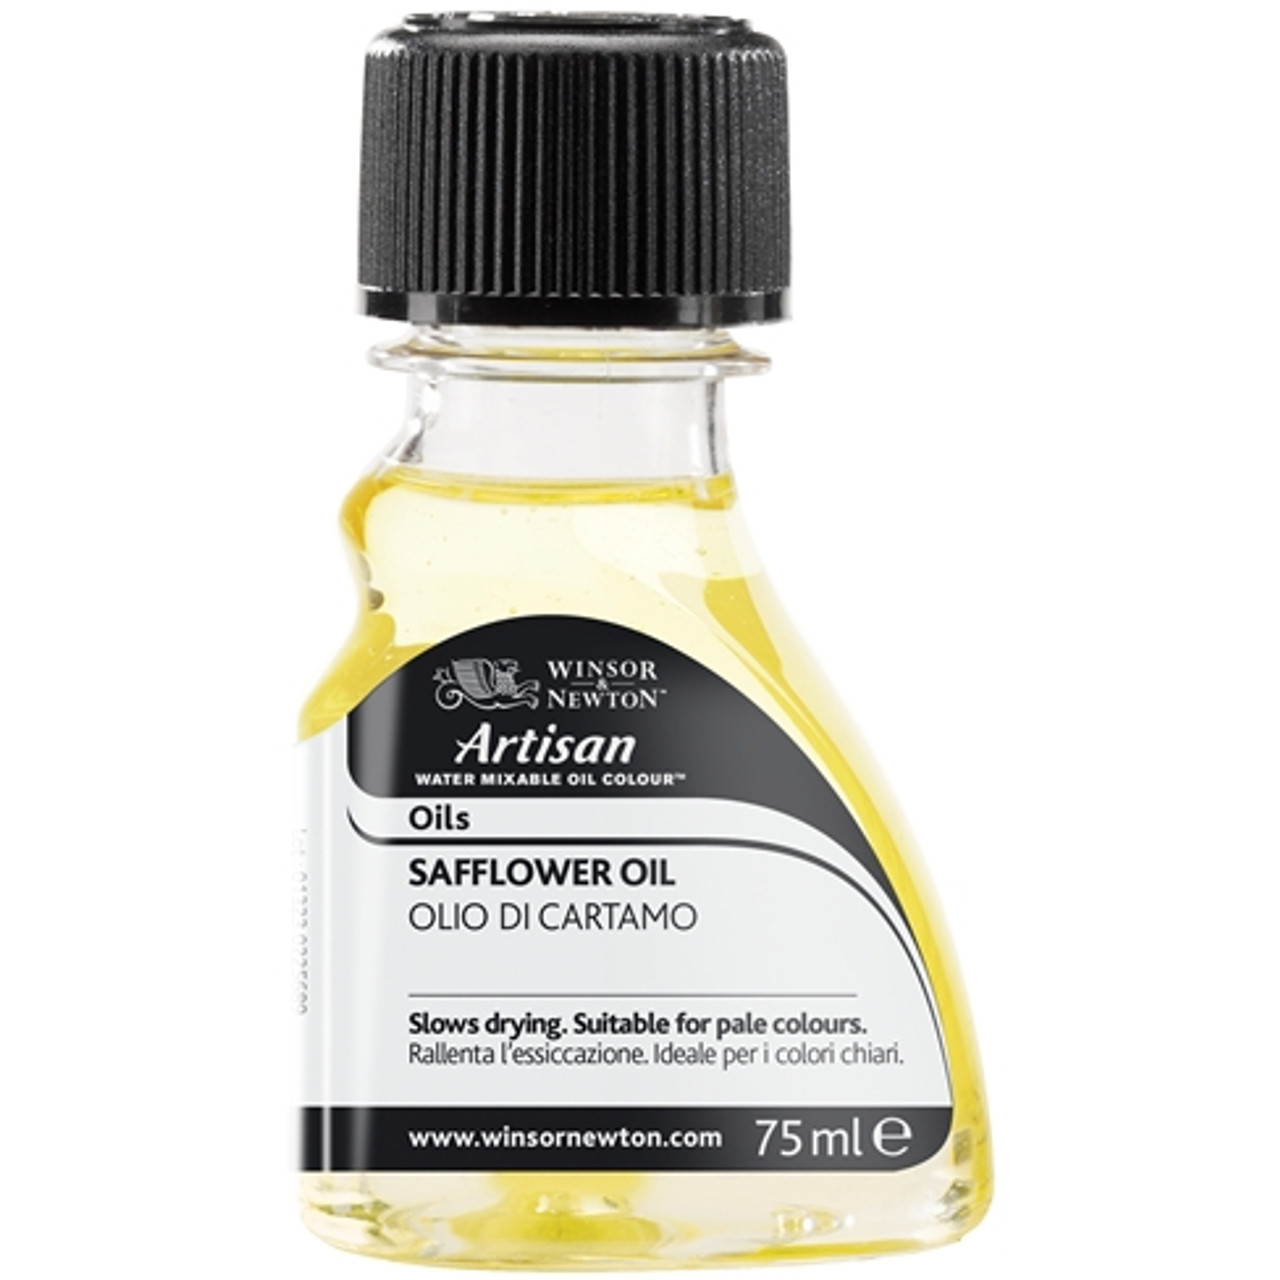 Artisan Water Mixable Safflower Oil, 75ml